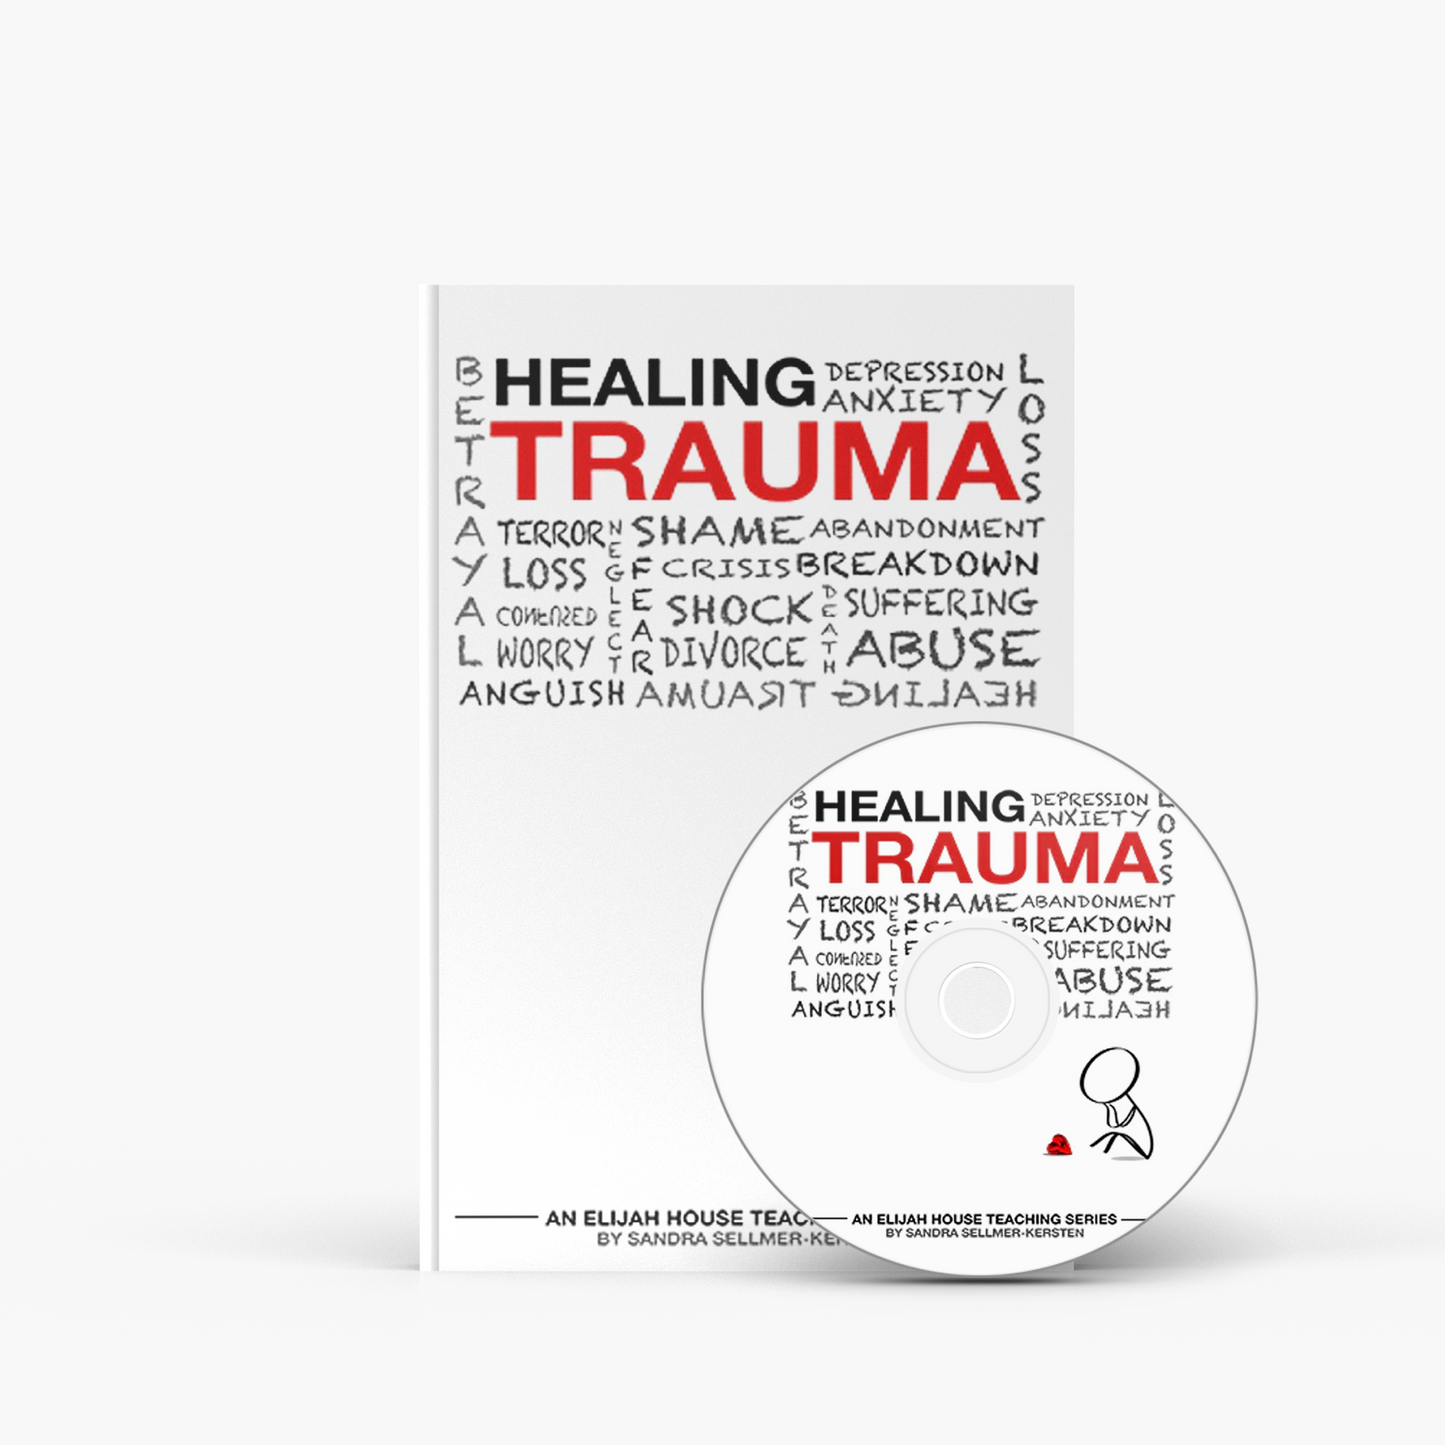 Healing Trauma - DVD Package Deal